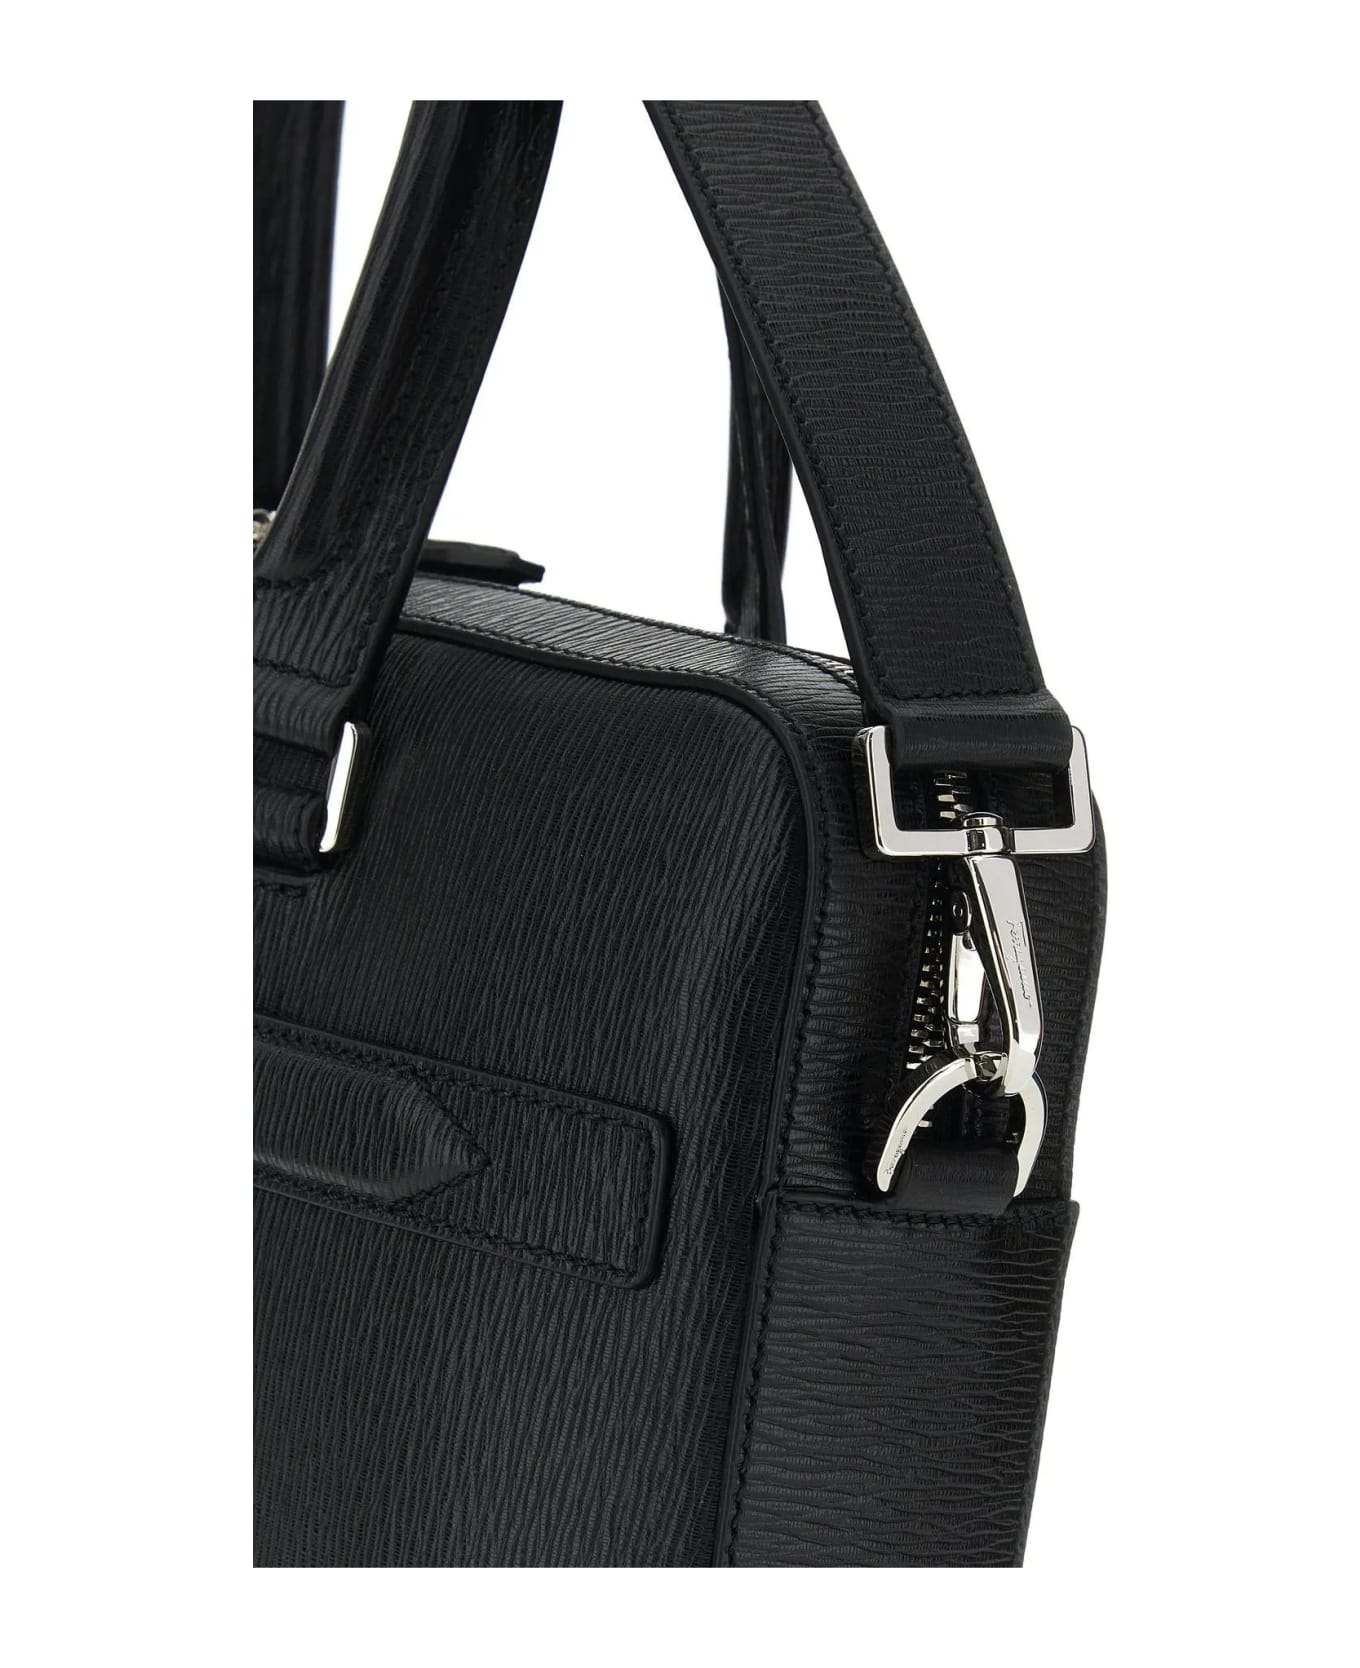 Ferragamo Black Leather Revival Briefcase - Black